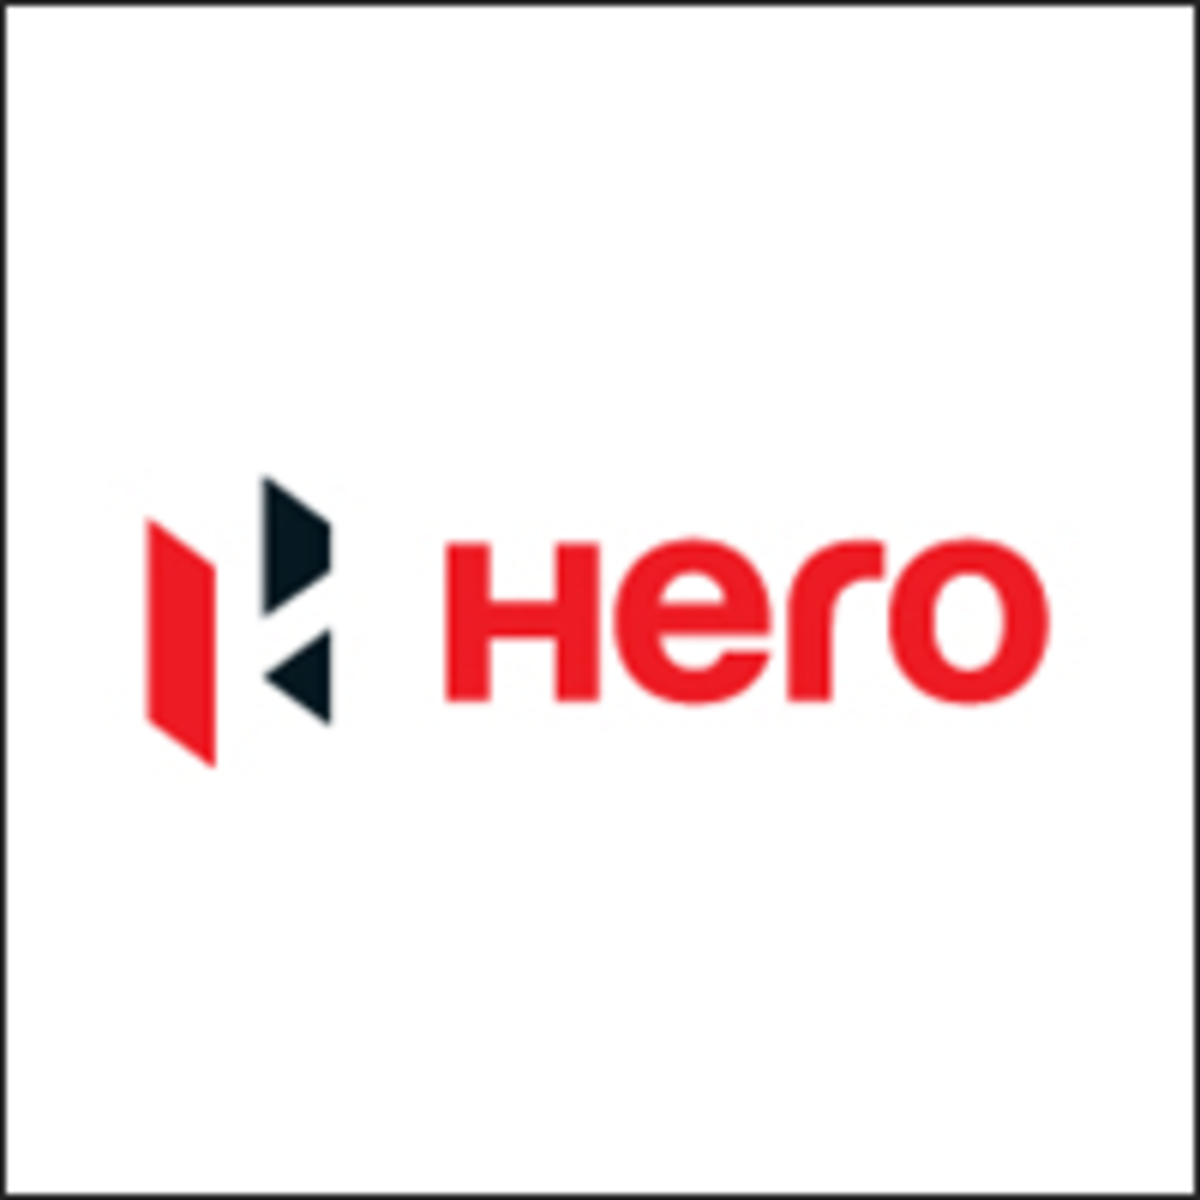 hero motocorp sales